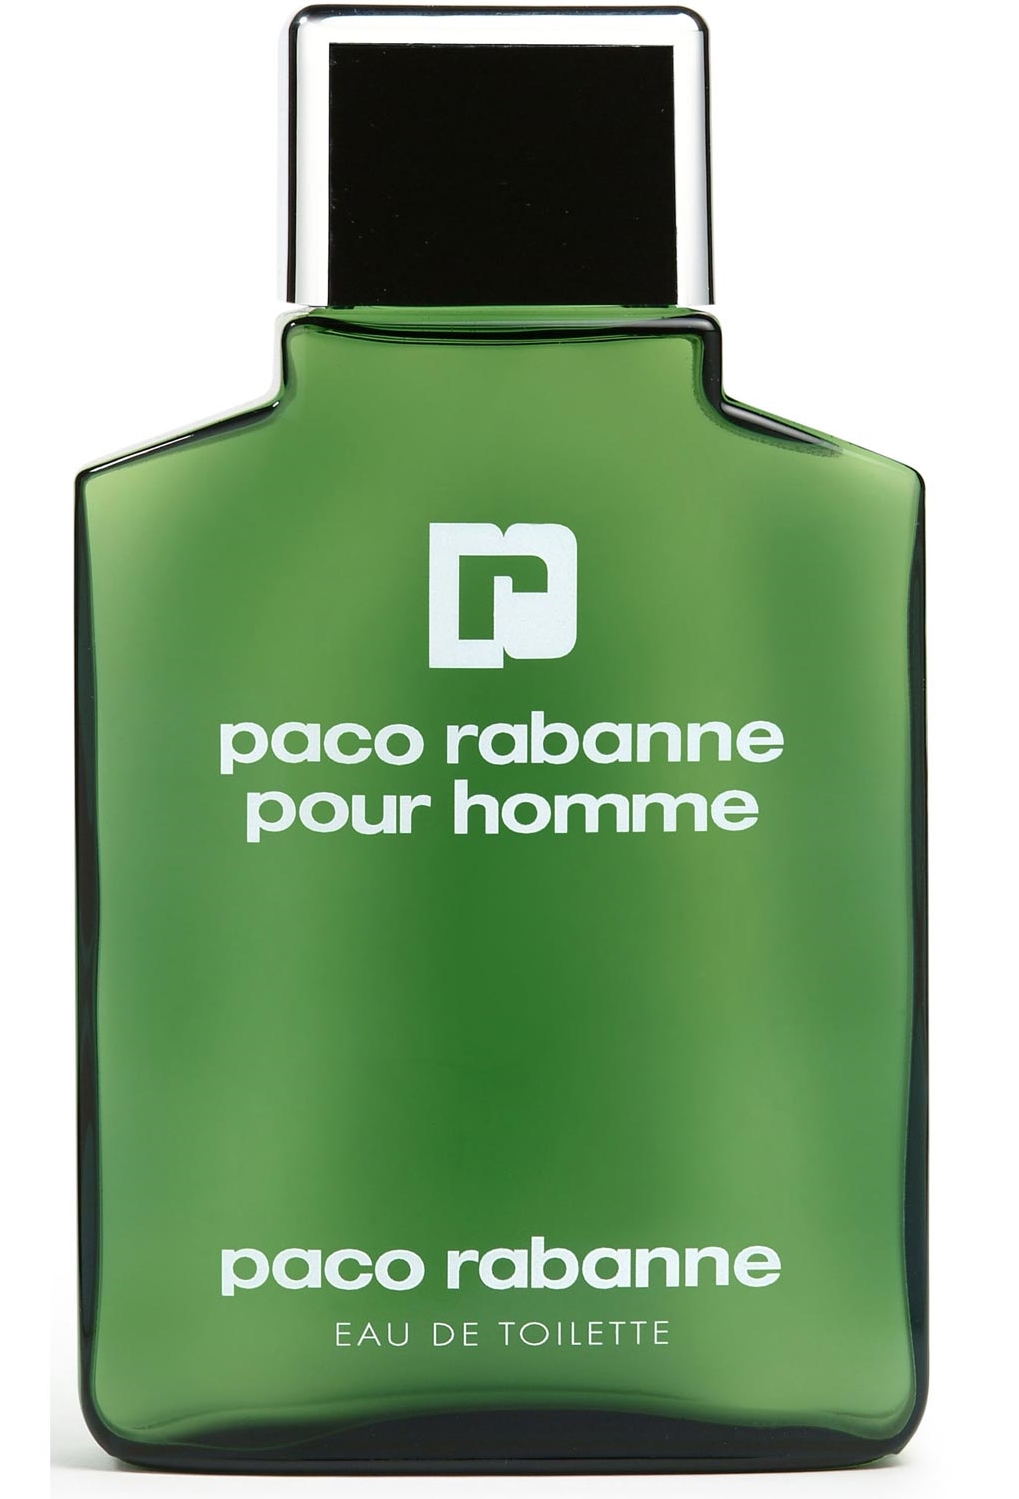 Paco Rabanne Pour Homme (Пако Рабанн Для Мужчин) купить духи